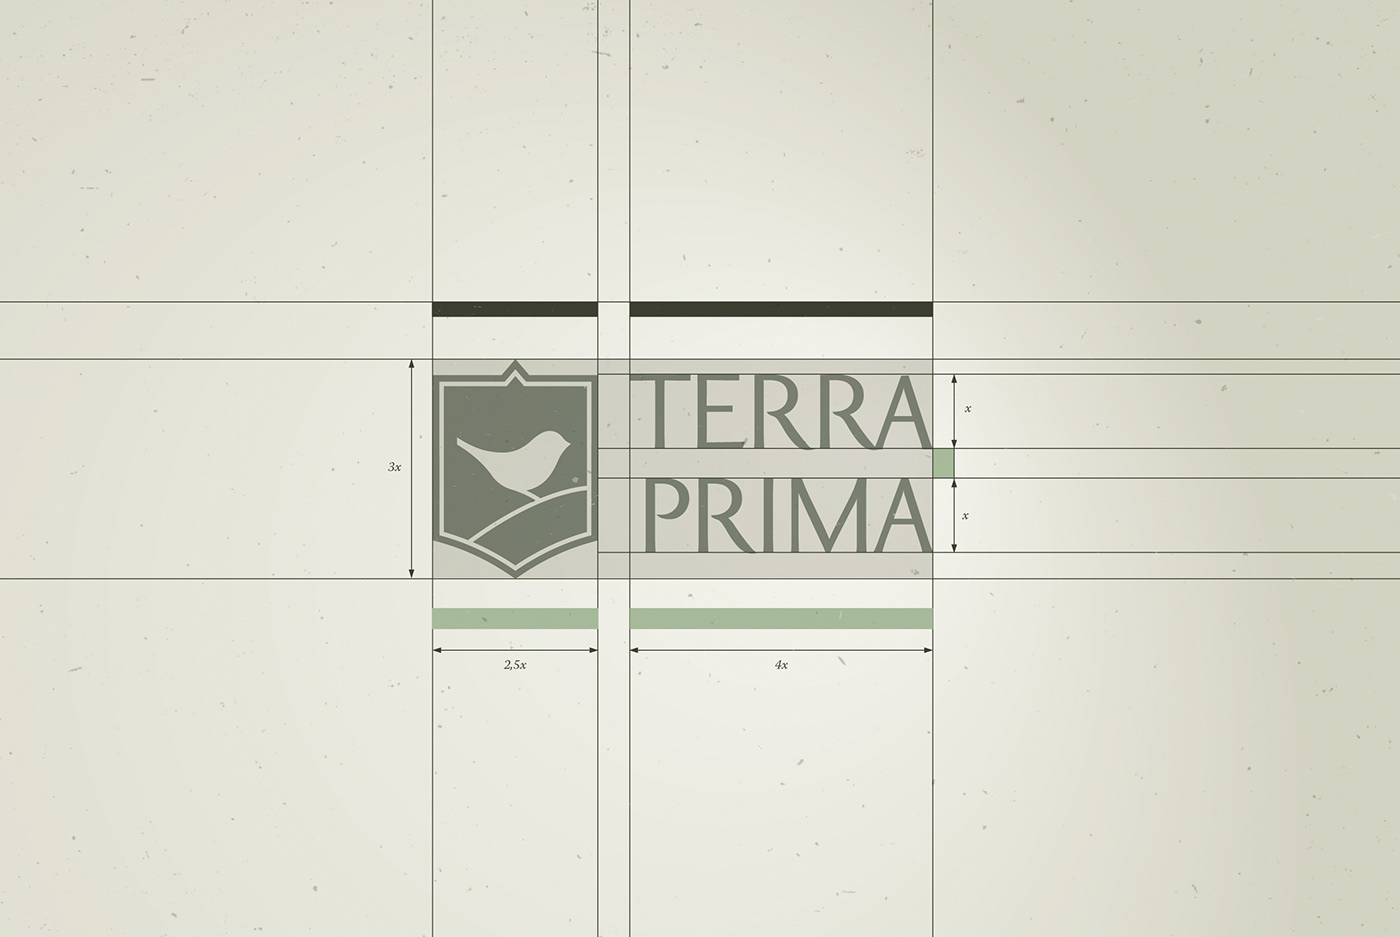 rebranding Terra Prima wood logo identity Guide garden organic